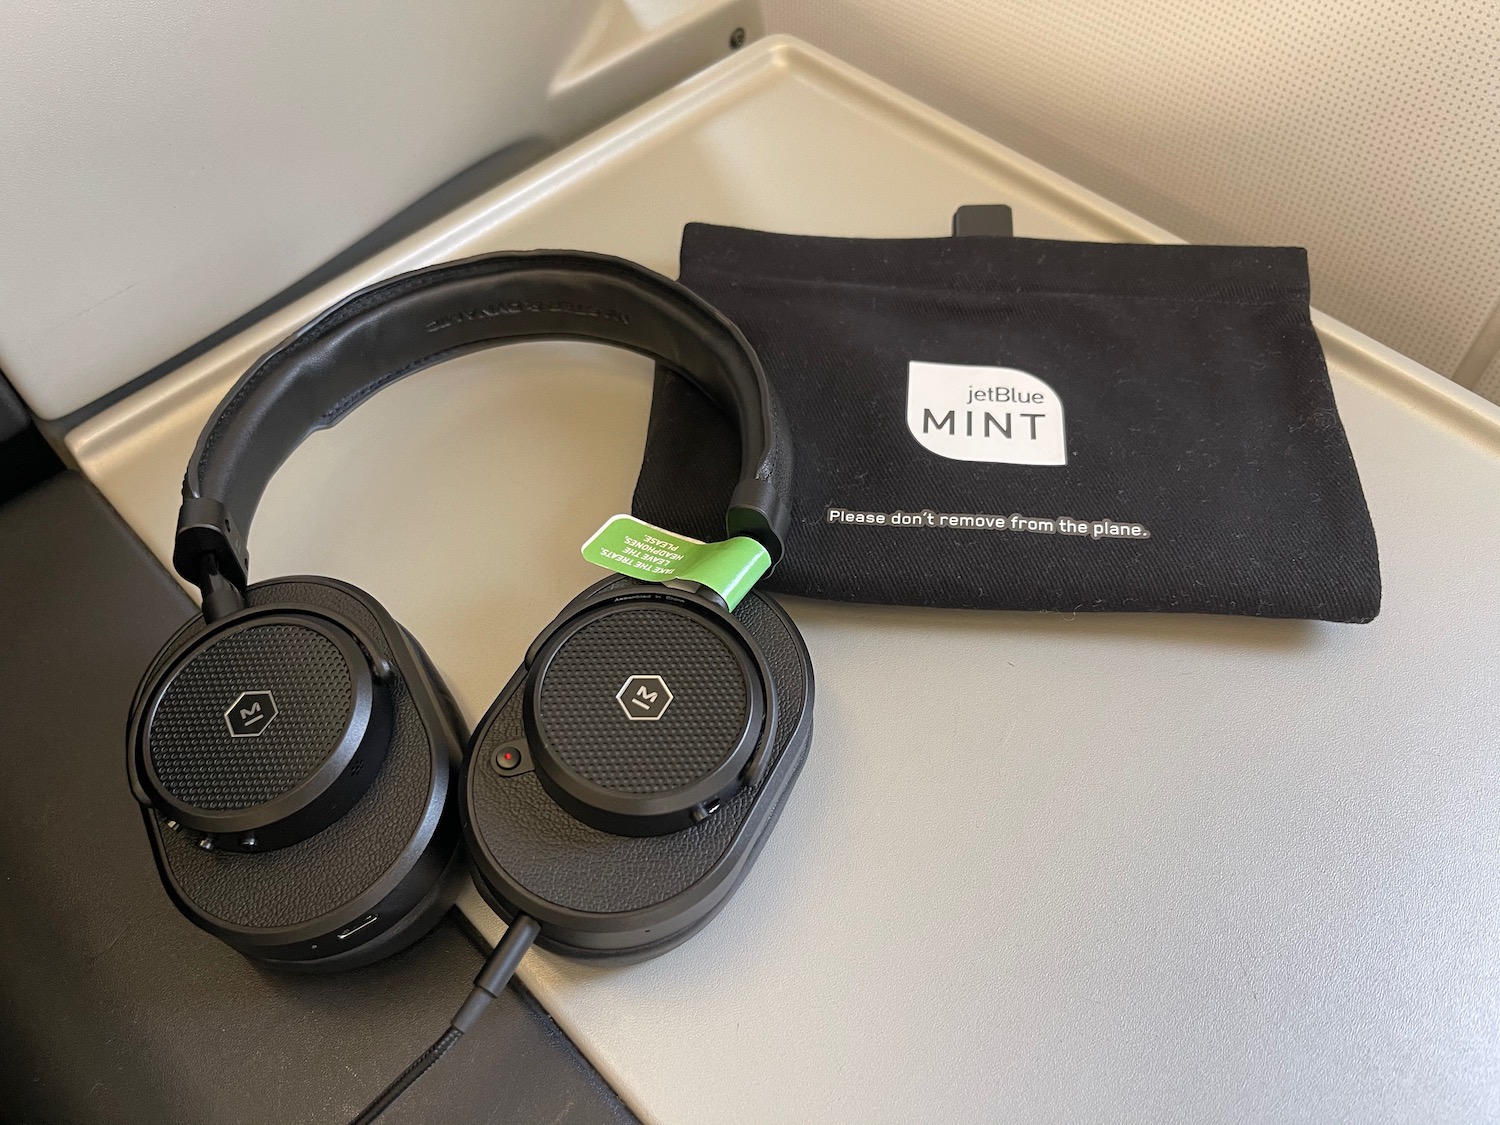 a pair of headphones next to a bag